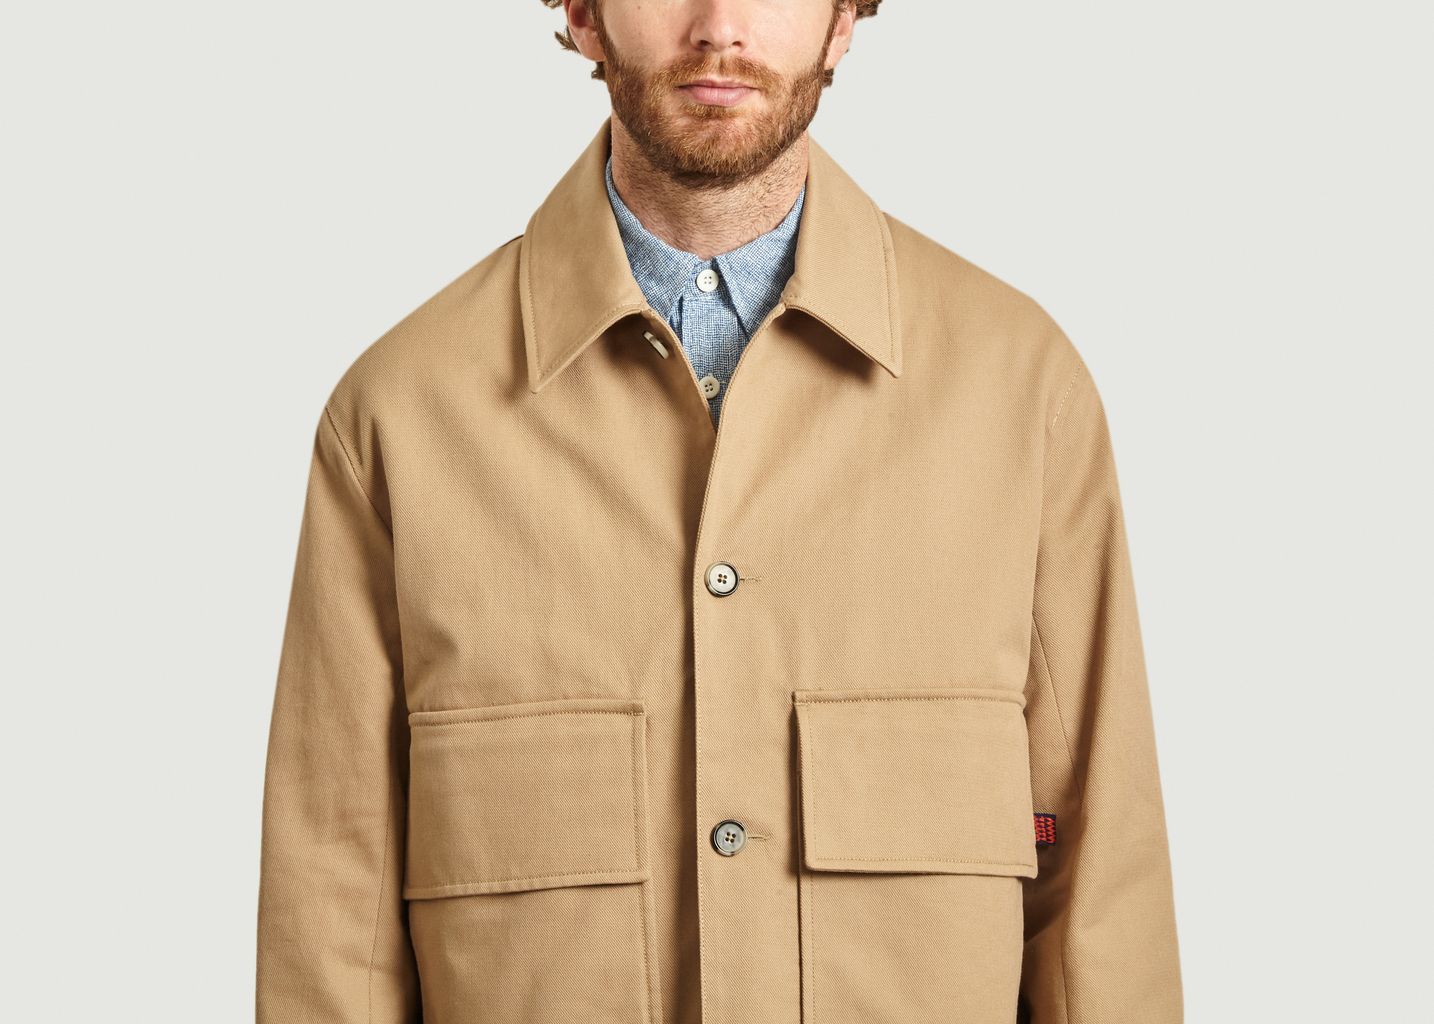 Lega Ponza oversize cotton jacket with pockets - Loreak Mendian